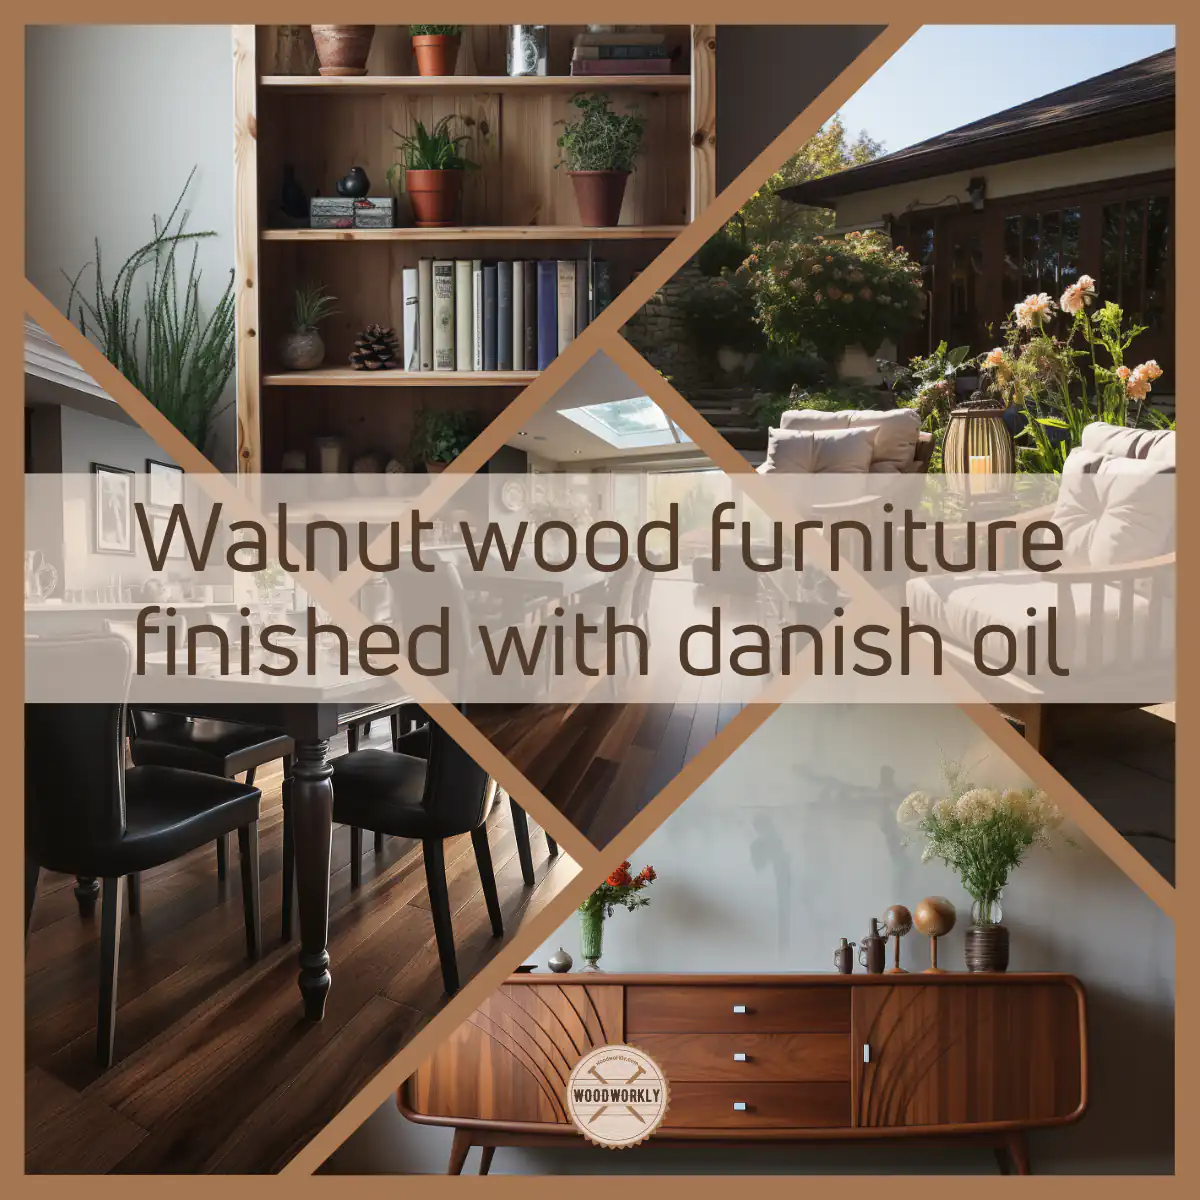 Walnut wood furniture finished with danish oil